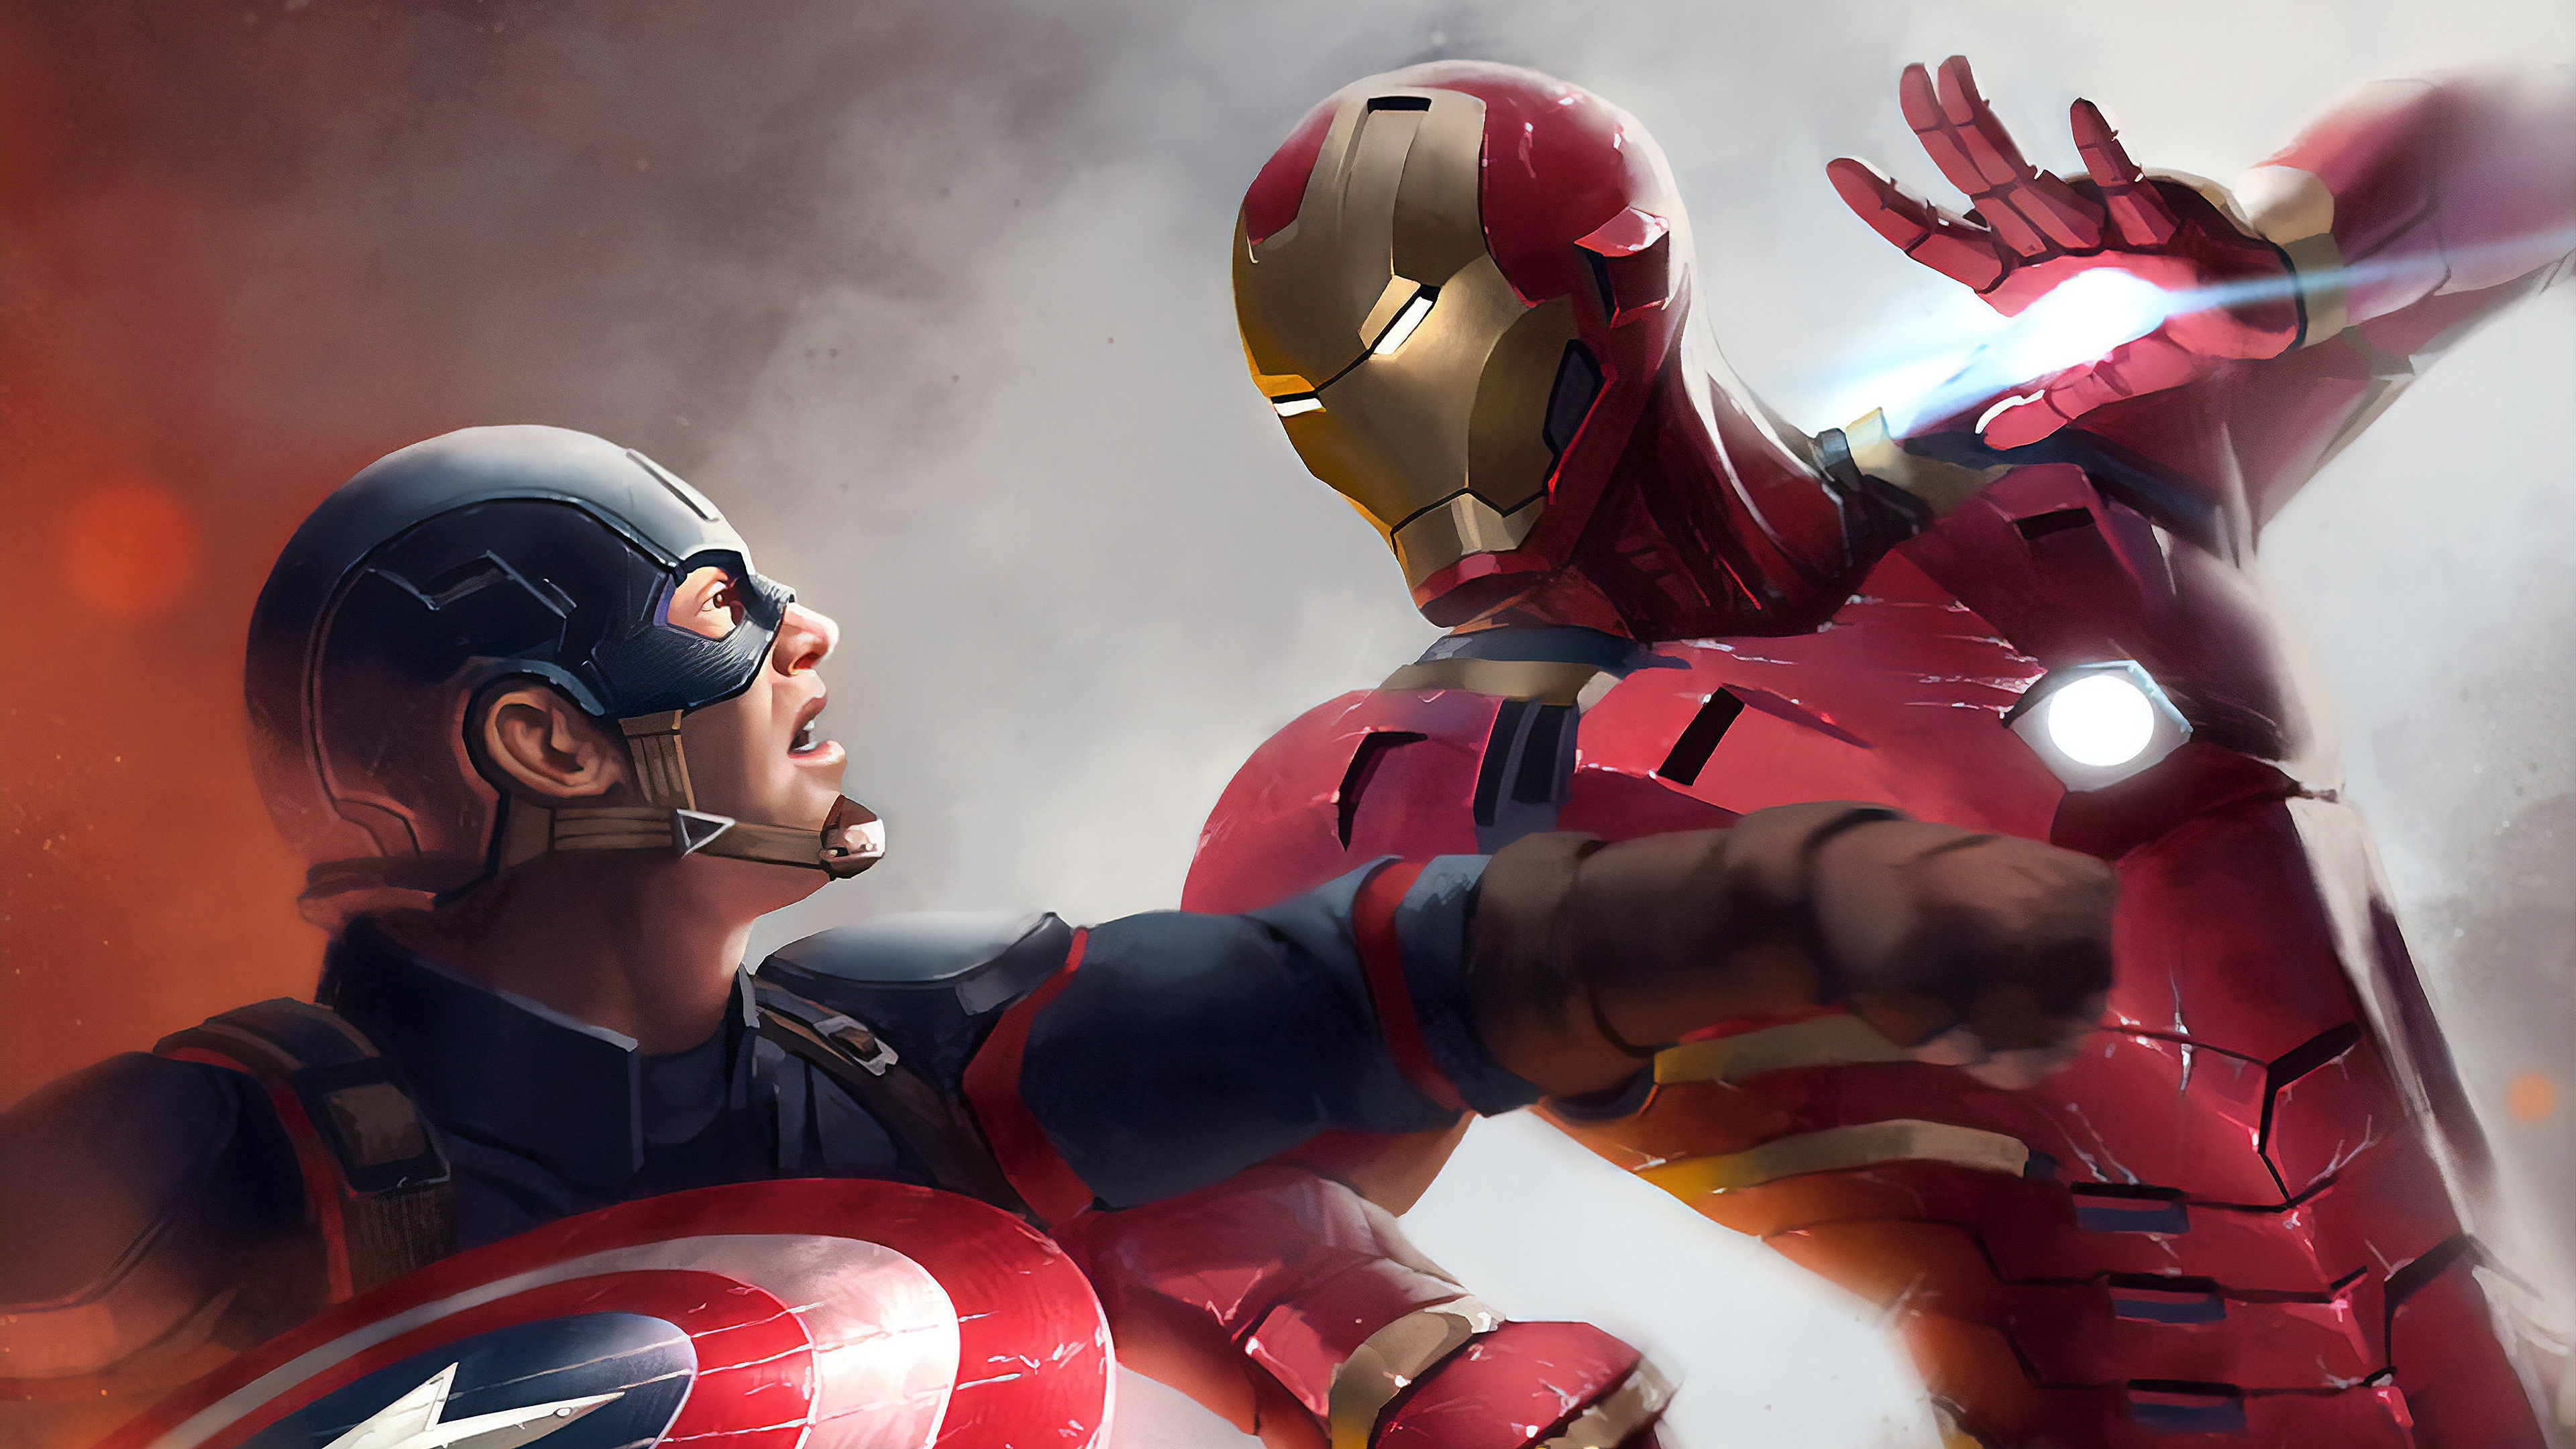 Iron Man Vs Captain America 4k, HD Superheroes, 4k Wallpapers, Images